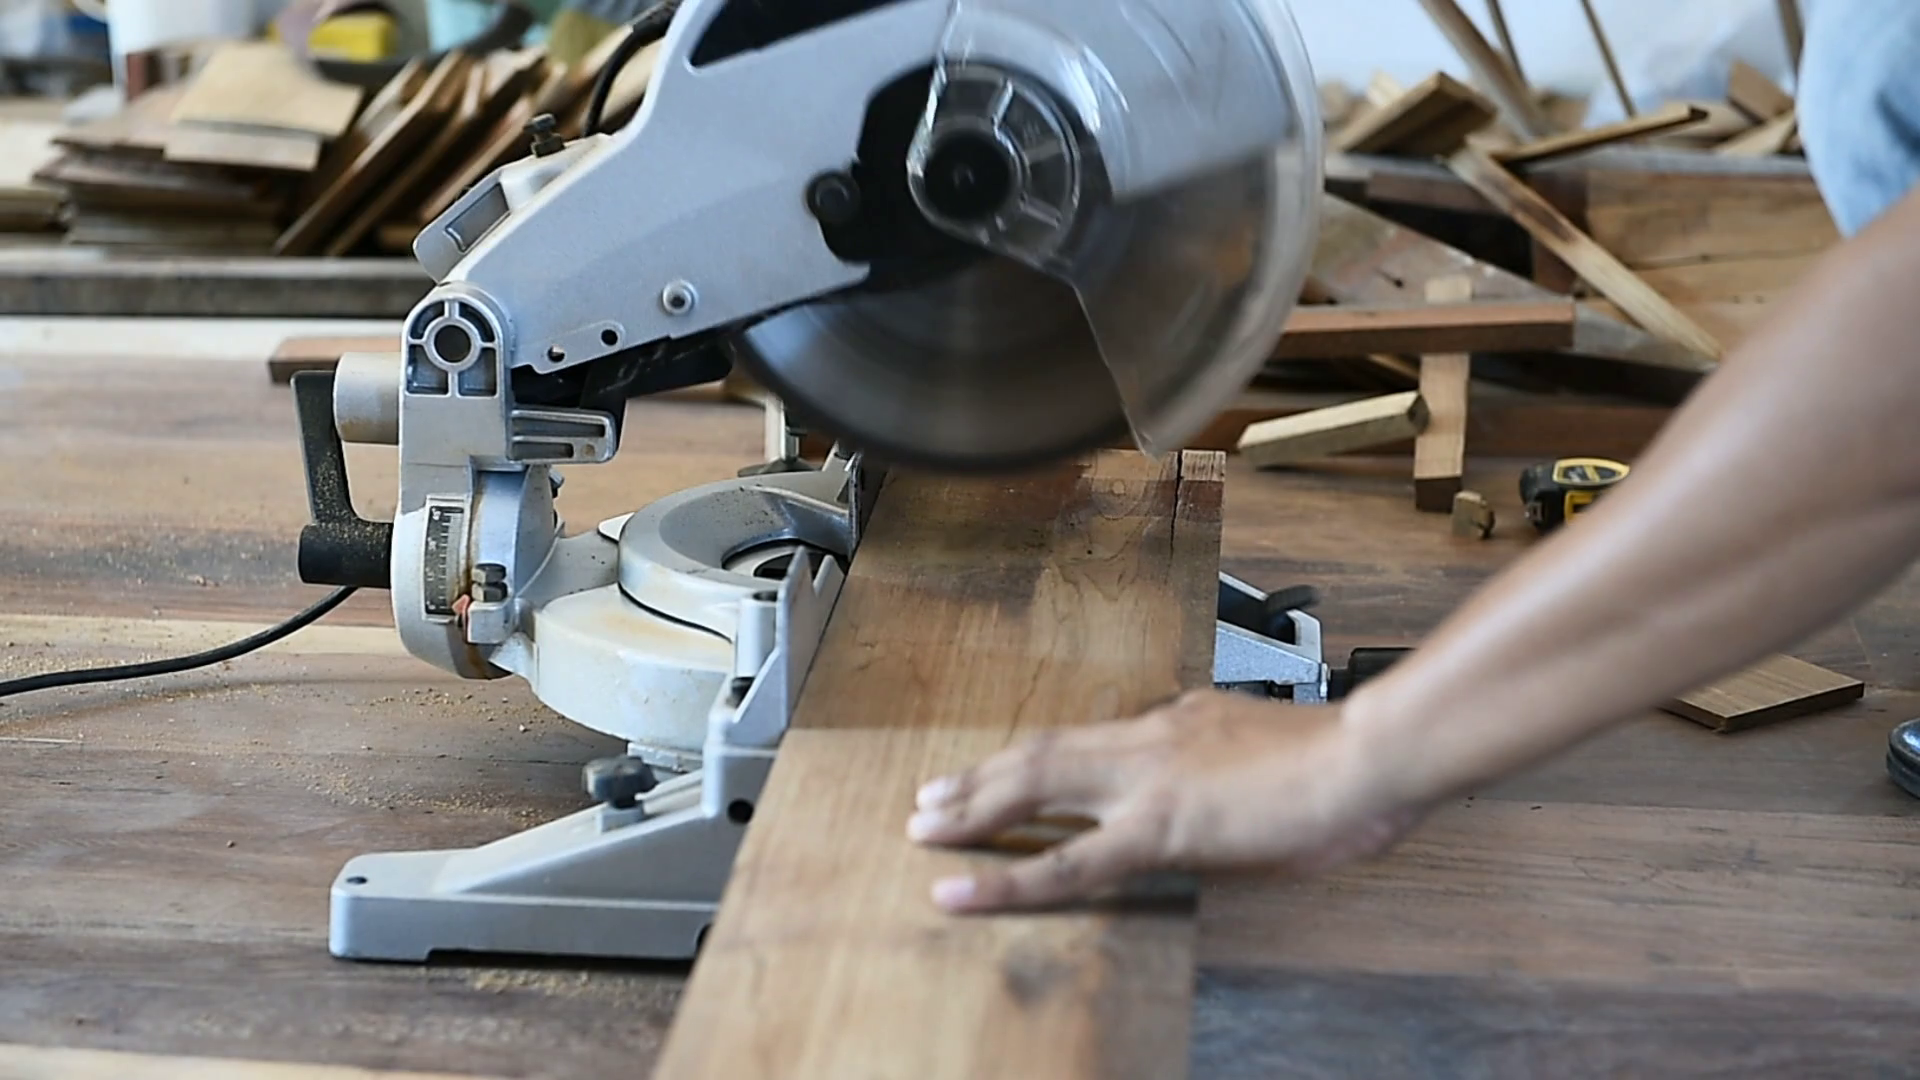 carpenter-man-use-a-circular-saw-for-cut-wood-plank_rxpsskrvl_thumbnail-full01